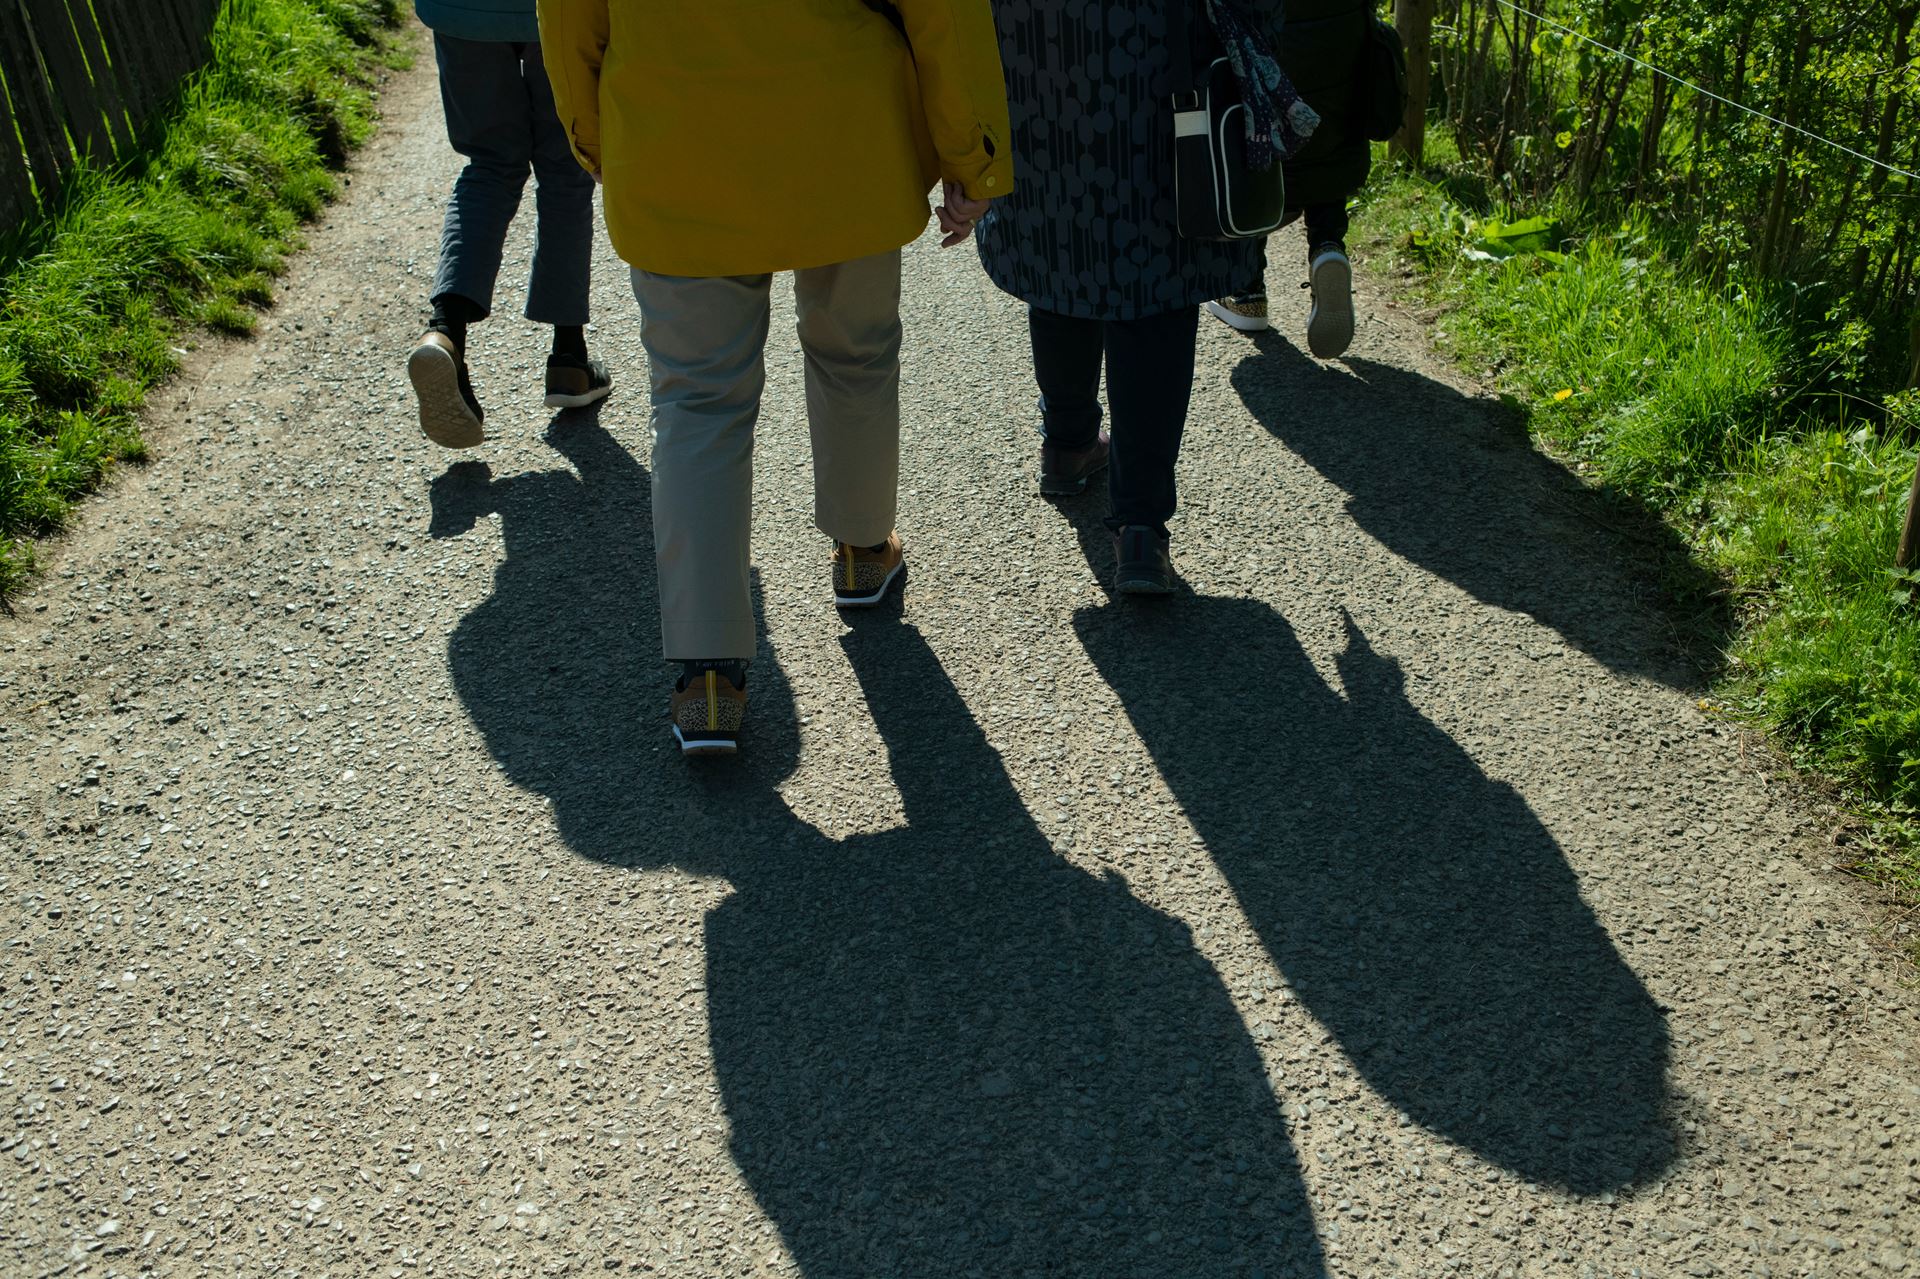 A group of people walking along a path alongside grass